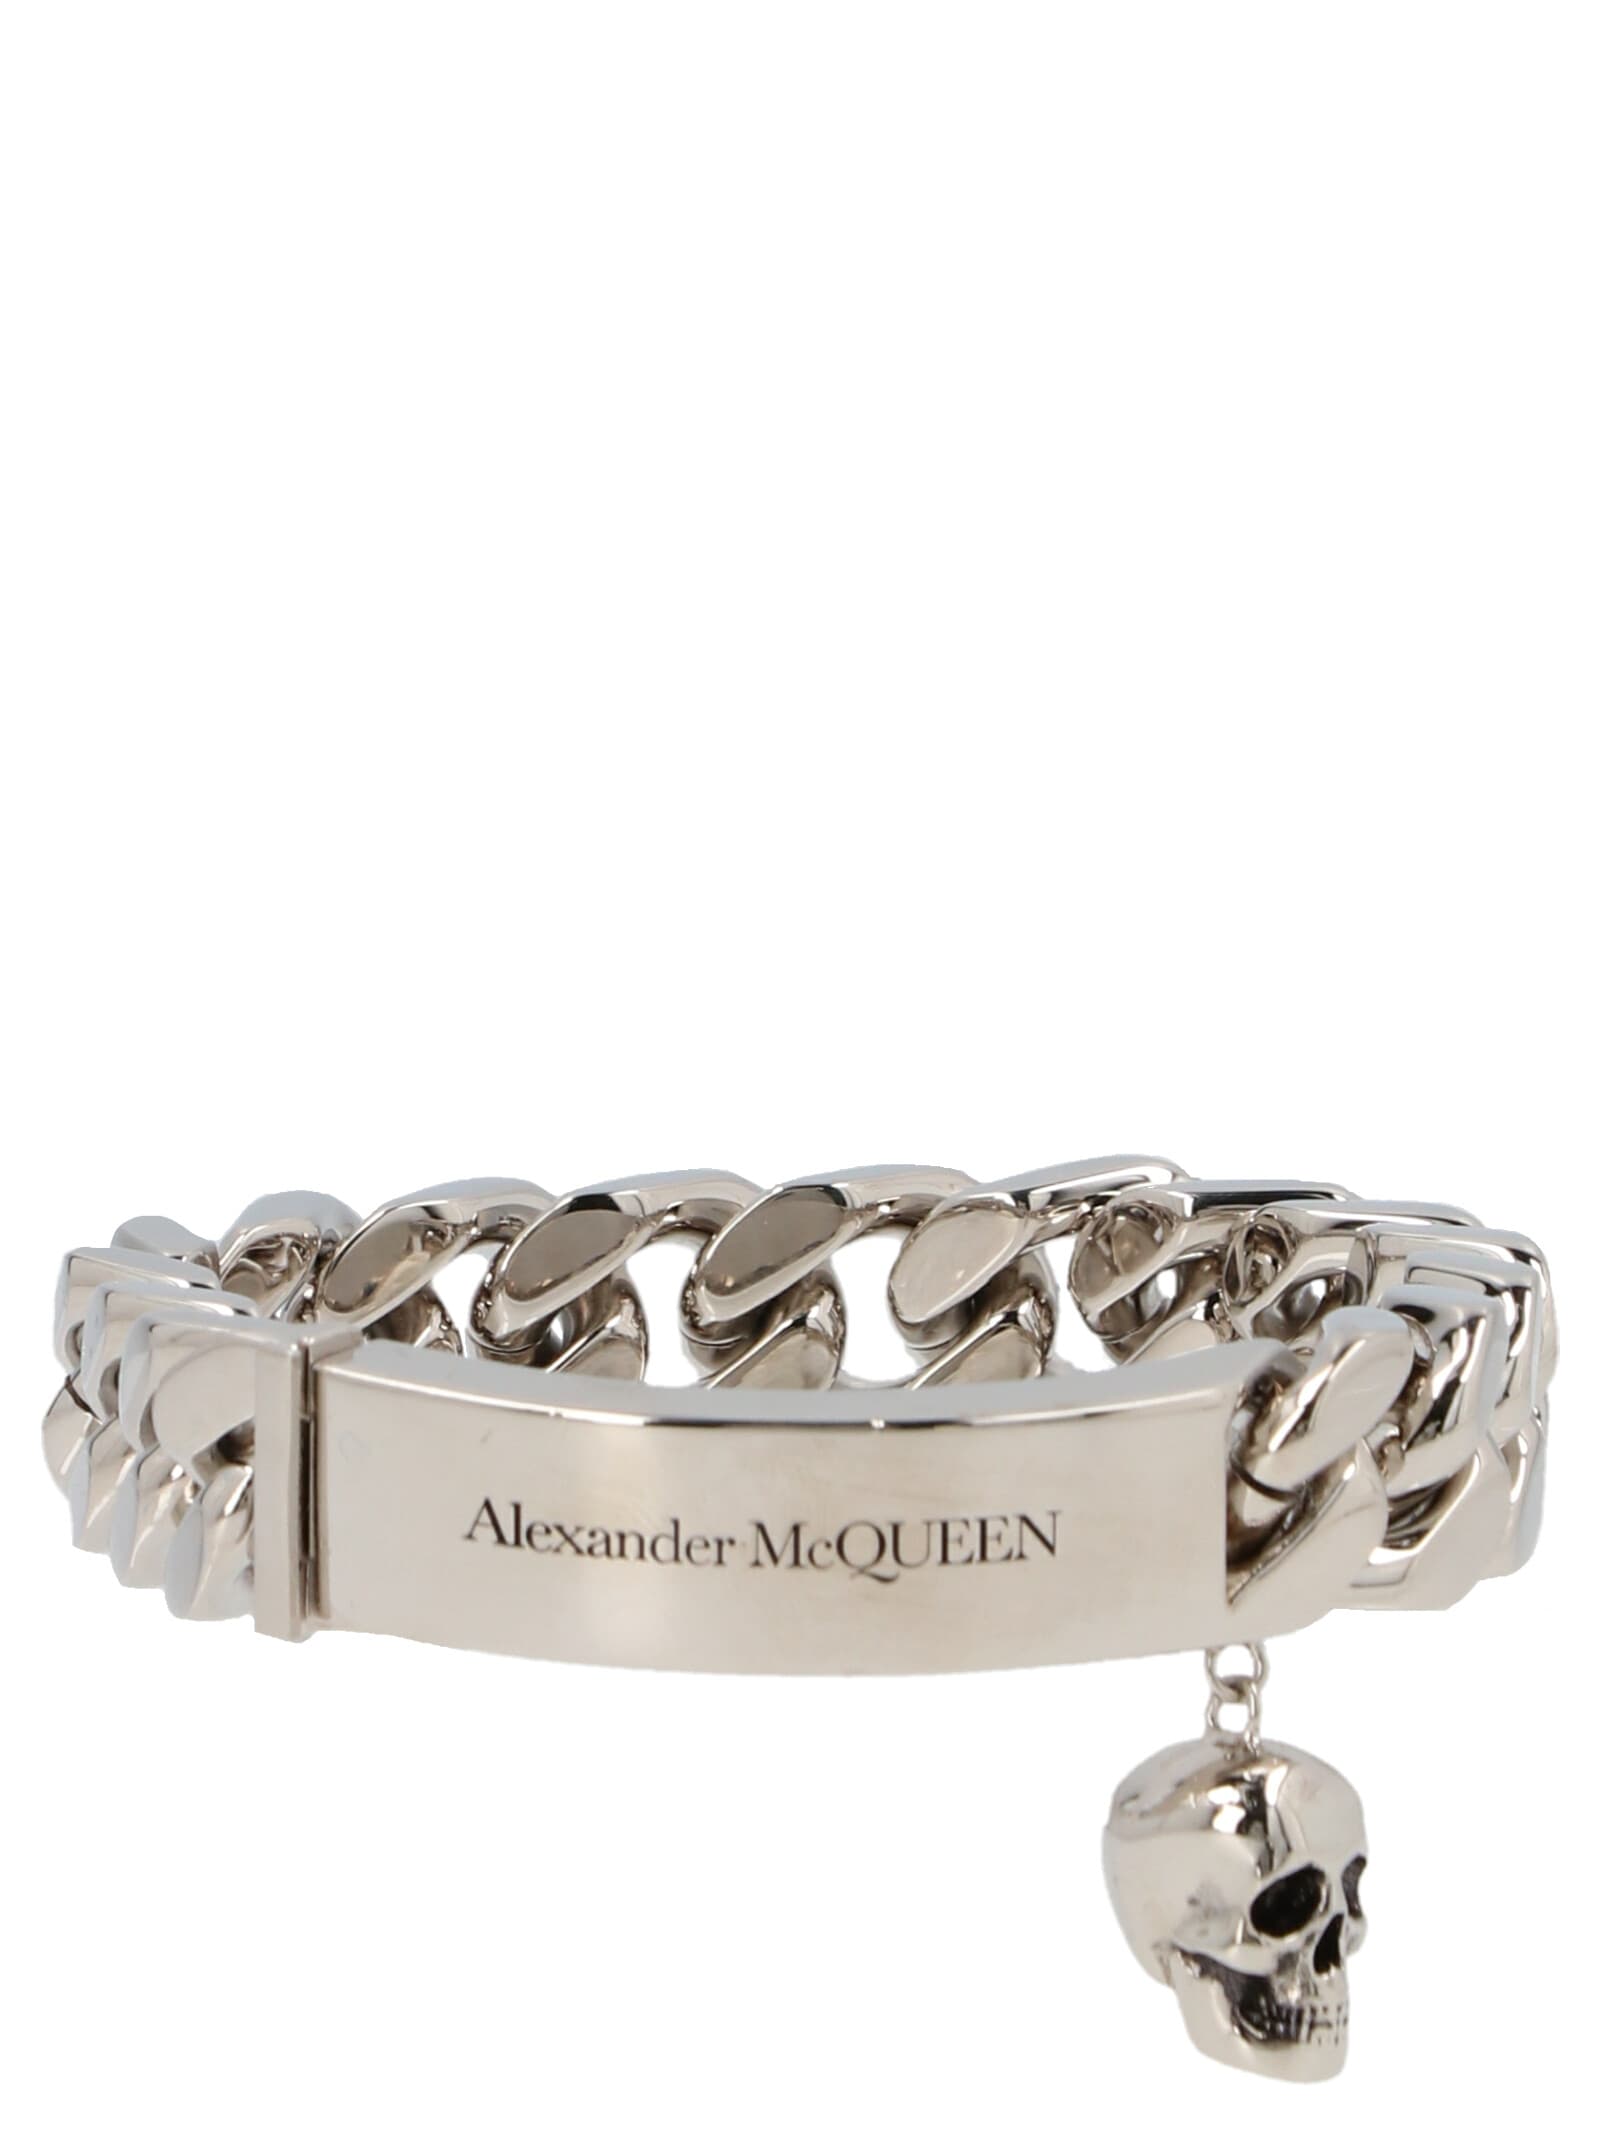 Alexander McQueen Maxi Chain Bracelet